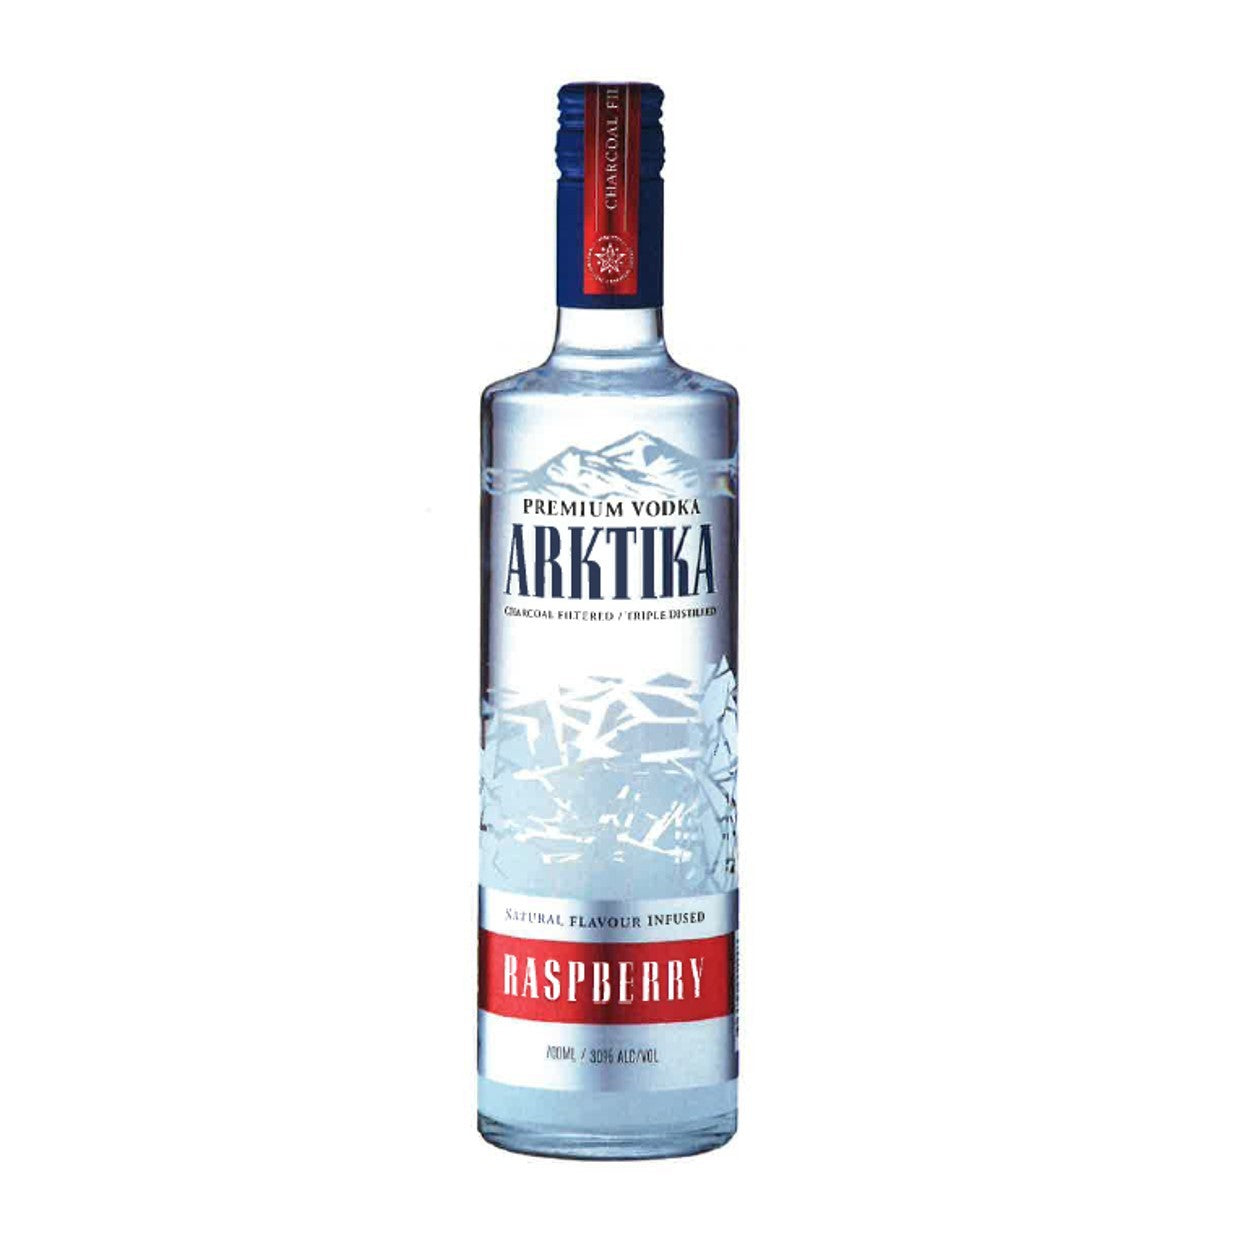 Arktika Raspberry Vodka 700ml - Boozeit.com.au